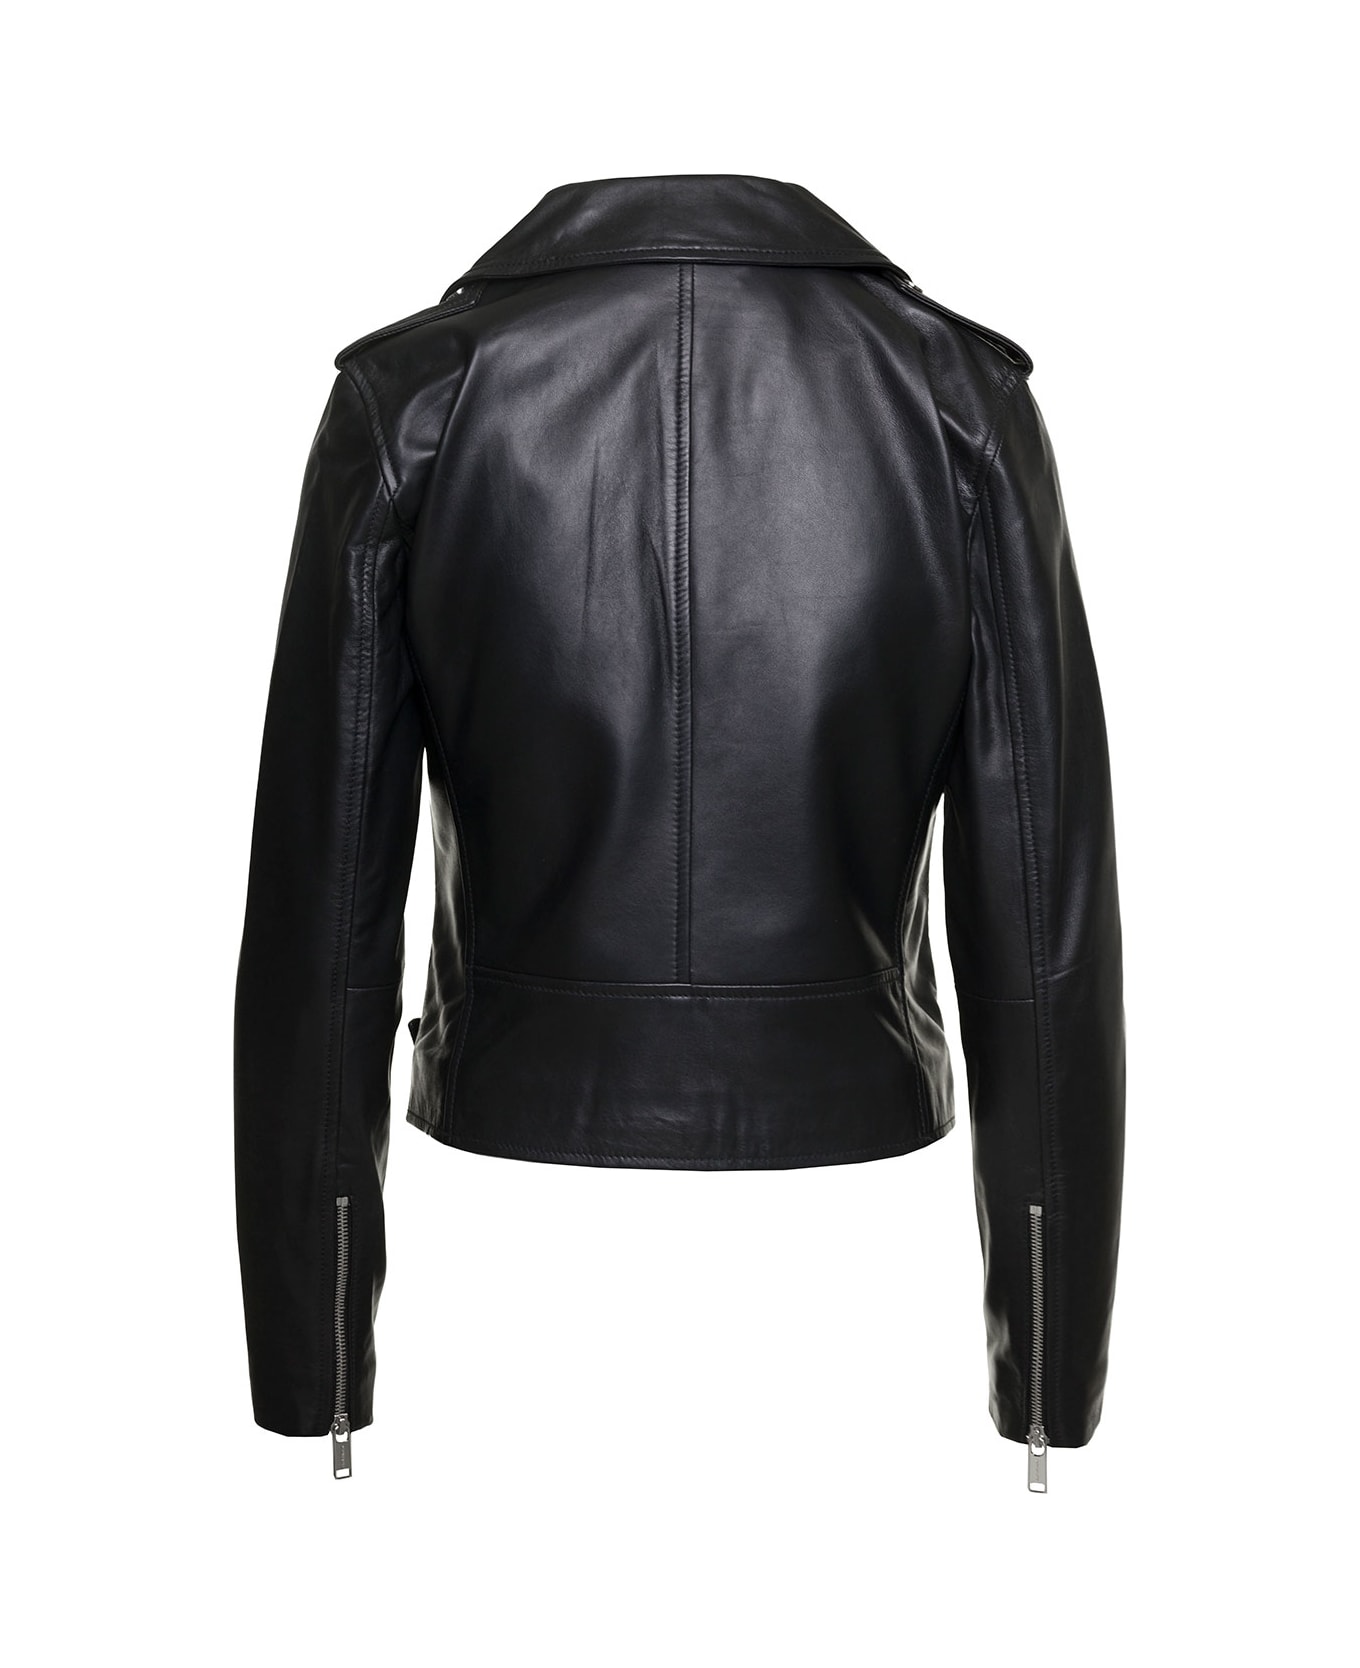 MICHAEL Michael Kors M Michael Kors Woman's Black Leather Biker Jacket - Black